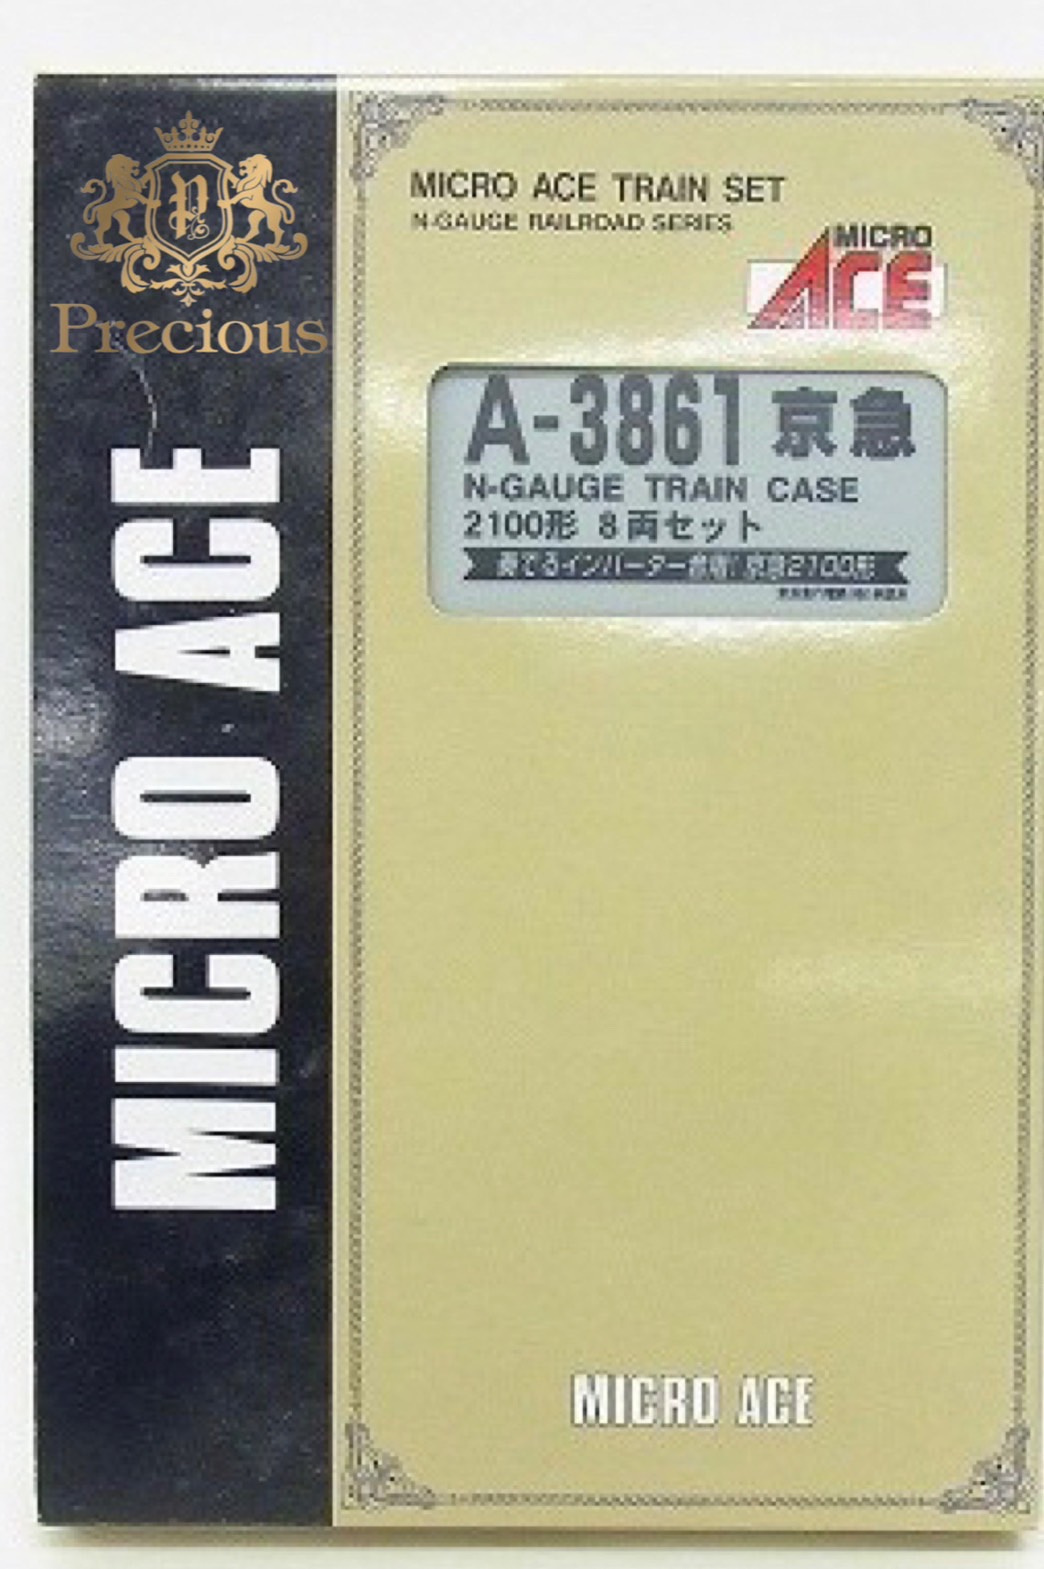 MICRO ACE A-3861 京急2100形 8両セットの買取実績 | 鉄道模型の買取実績一覧 | 鉄道模型の買取侍